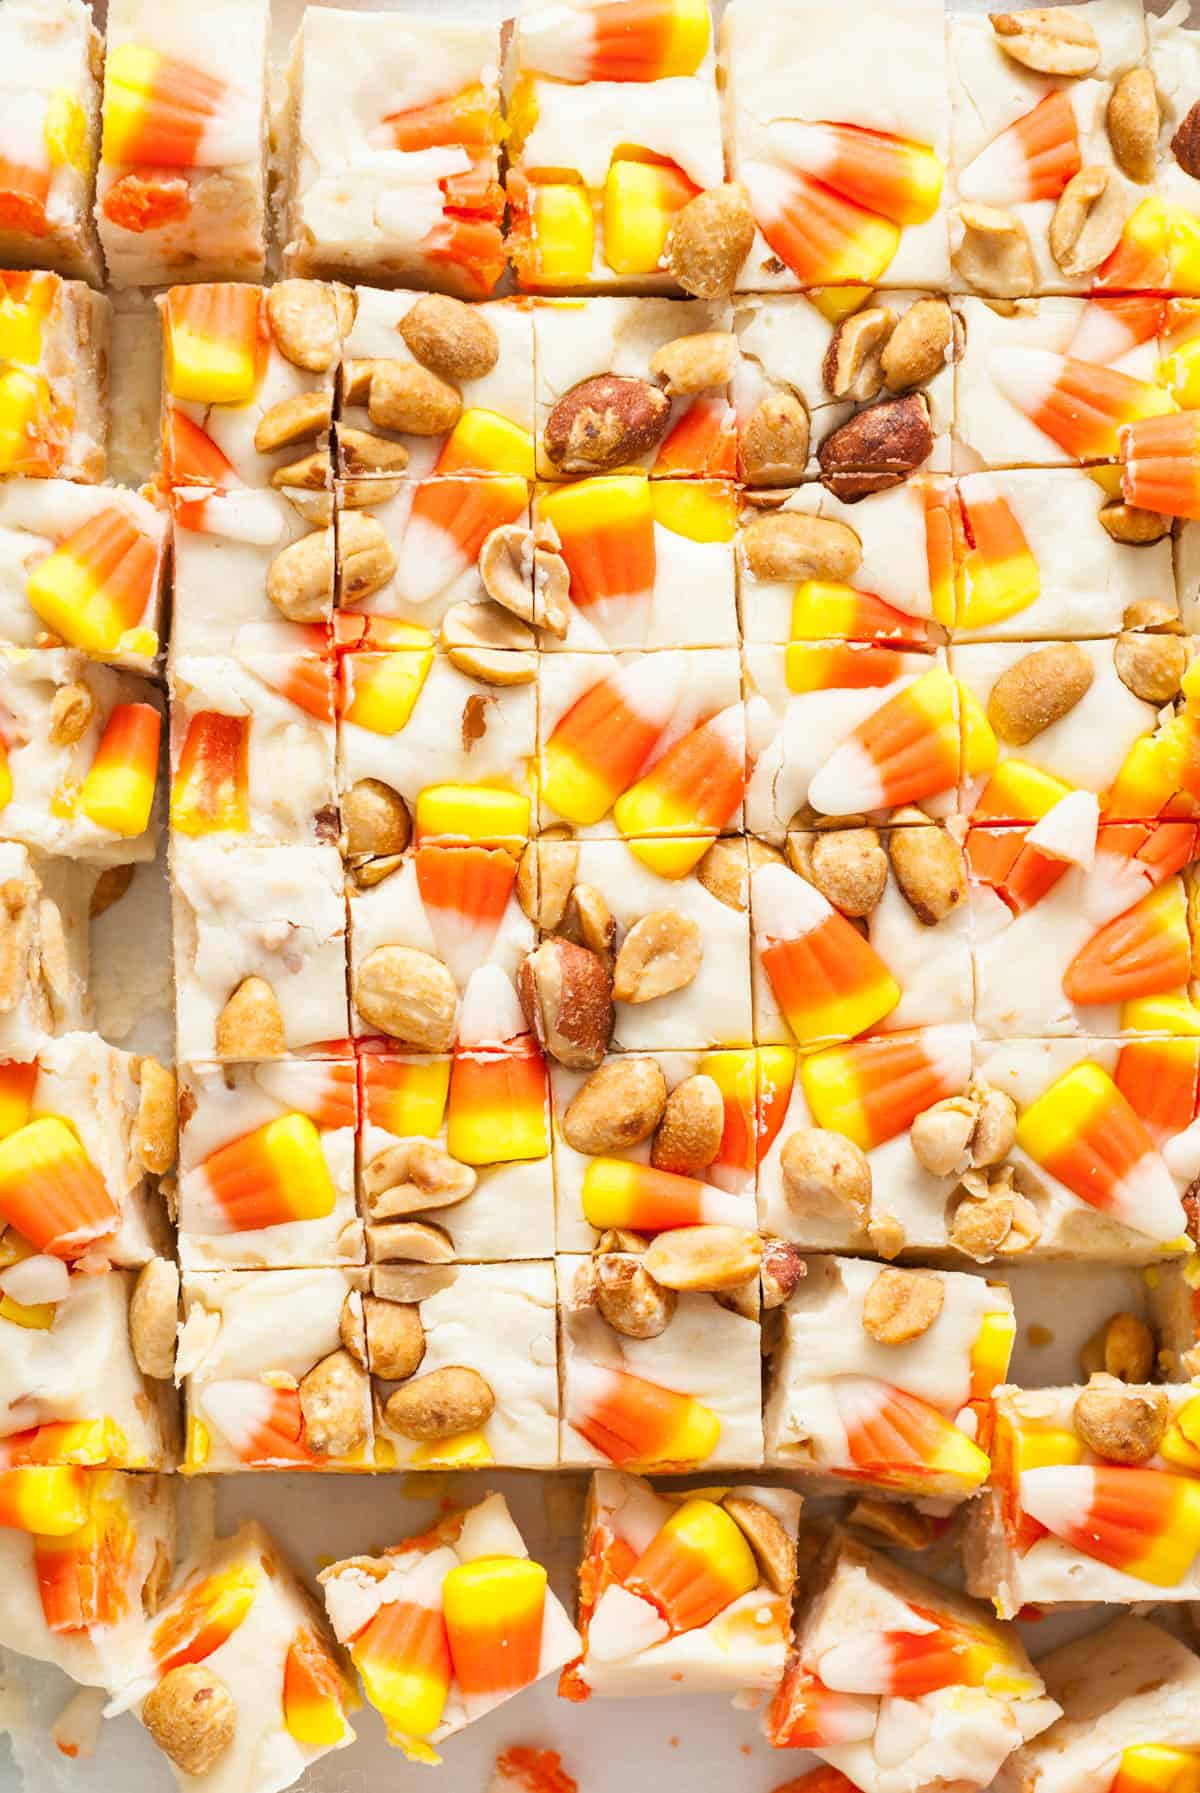 A close image of squares of Halloween candy corn & peanut fudge.